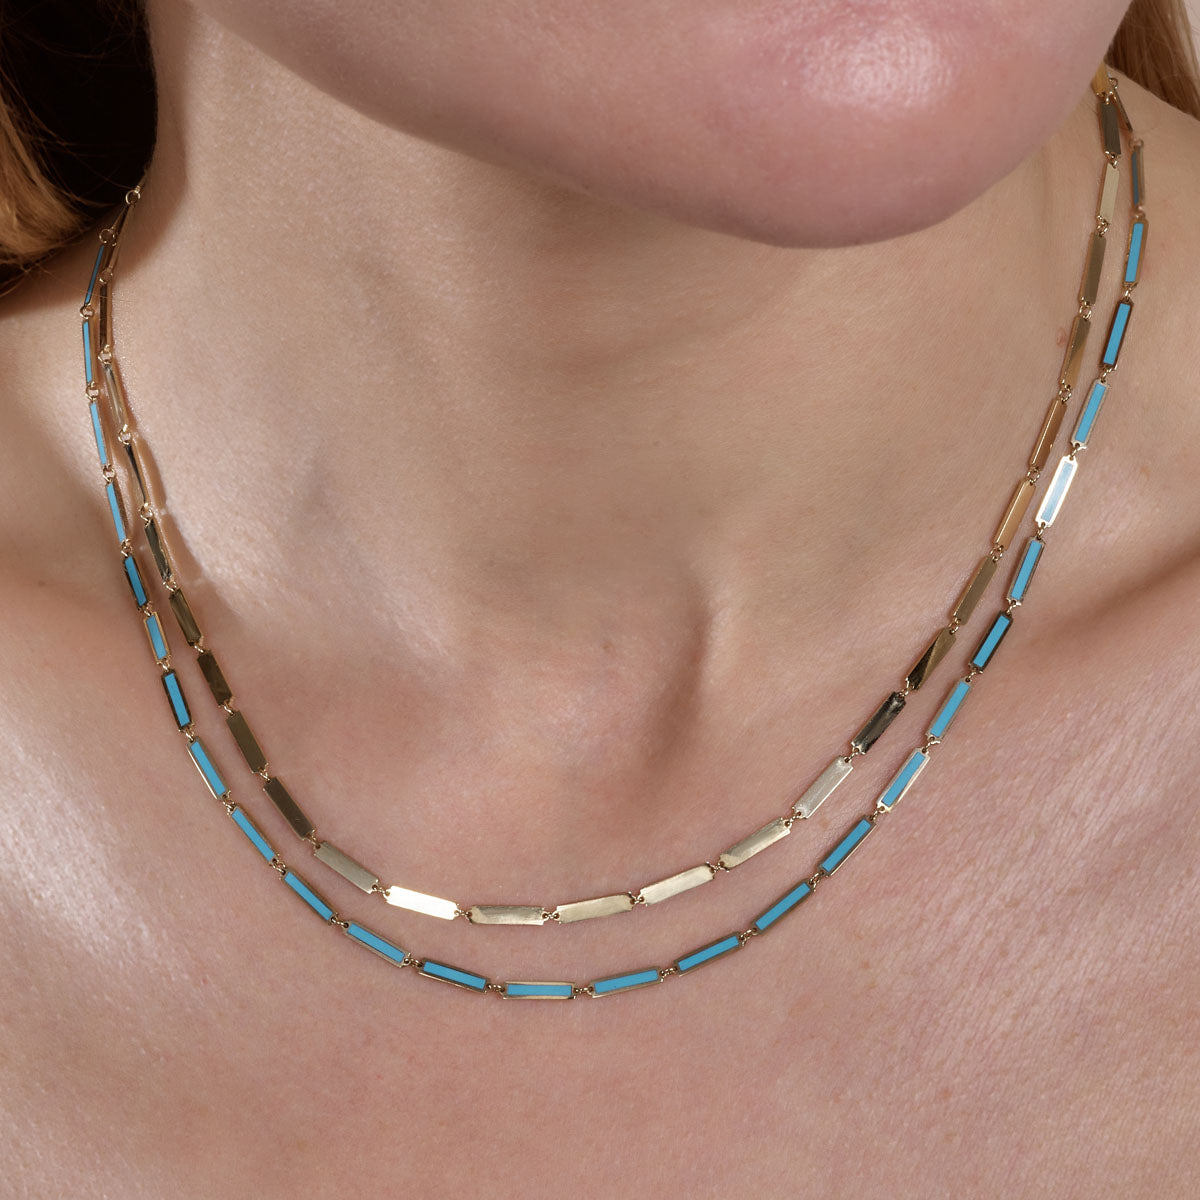 gold long bar links necklace and gold turquoise long bar links necklace on models neck_07650dc4 c717 4ffa 92d5 fcb68e7d535d